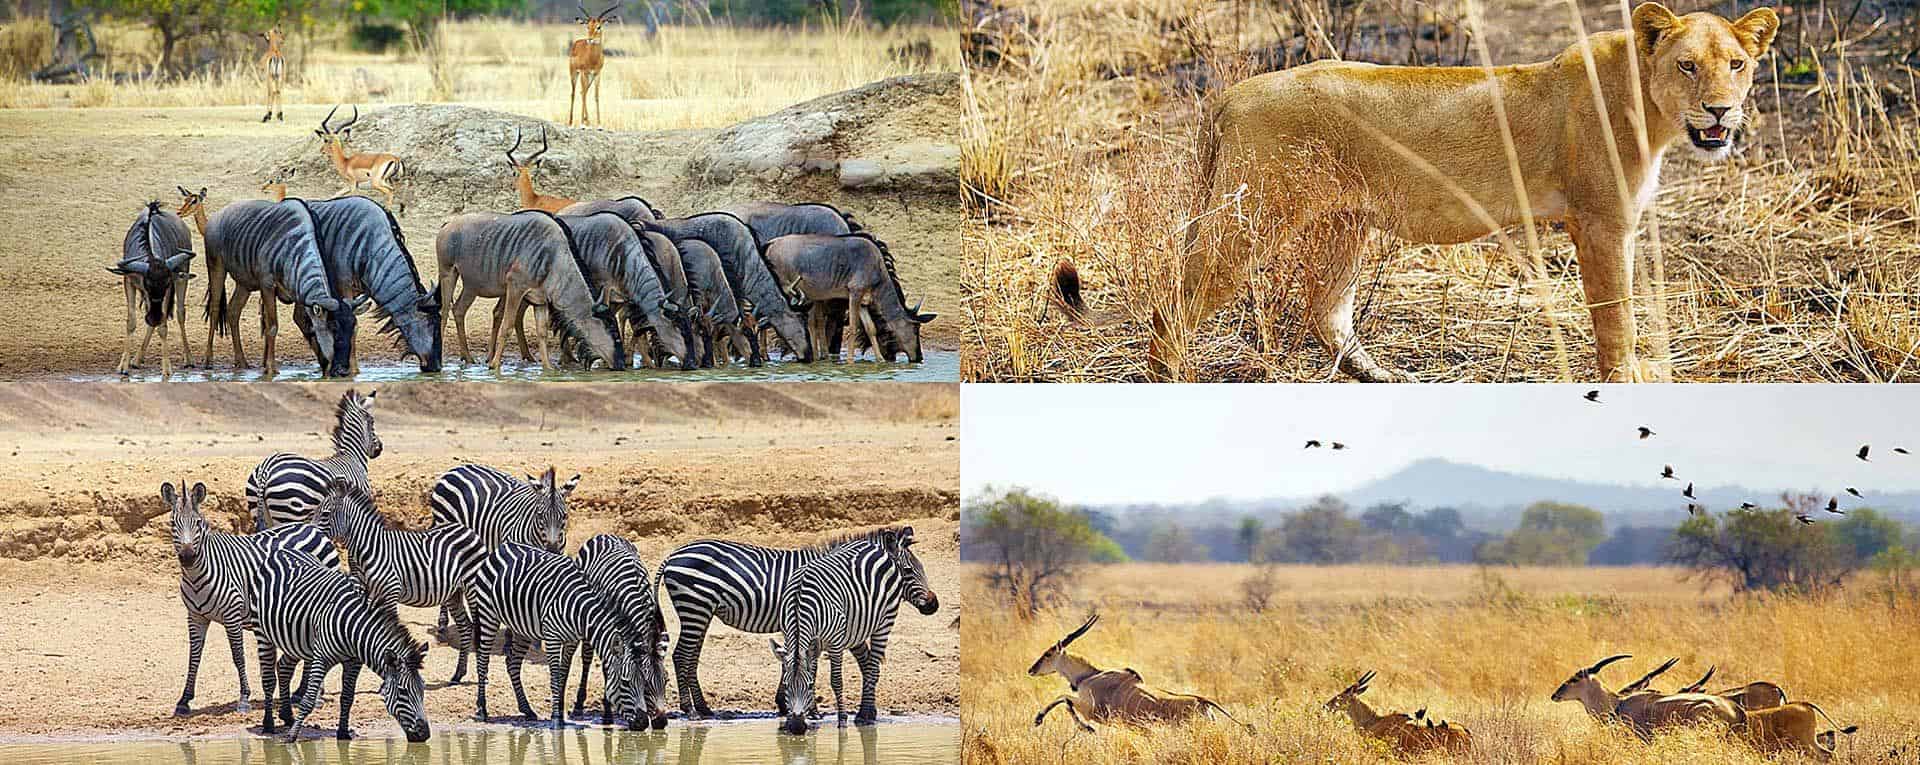 mikumi safari tanzania